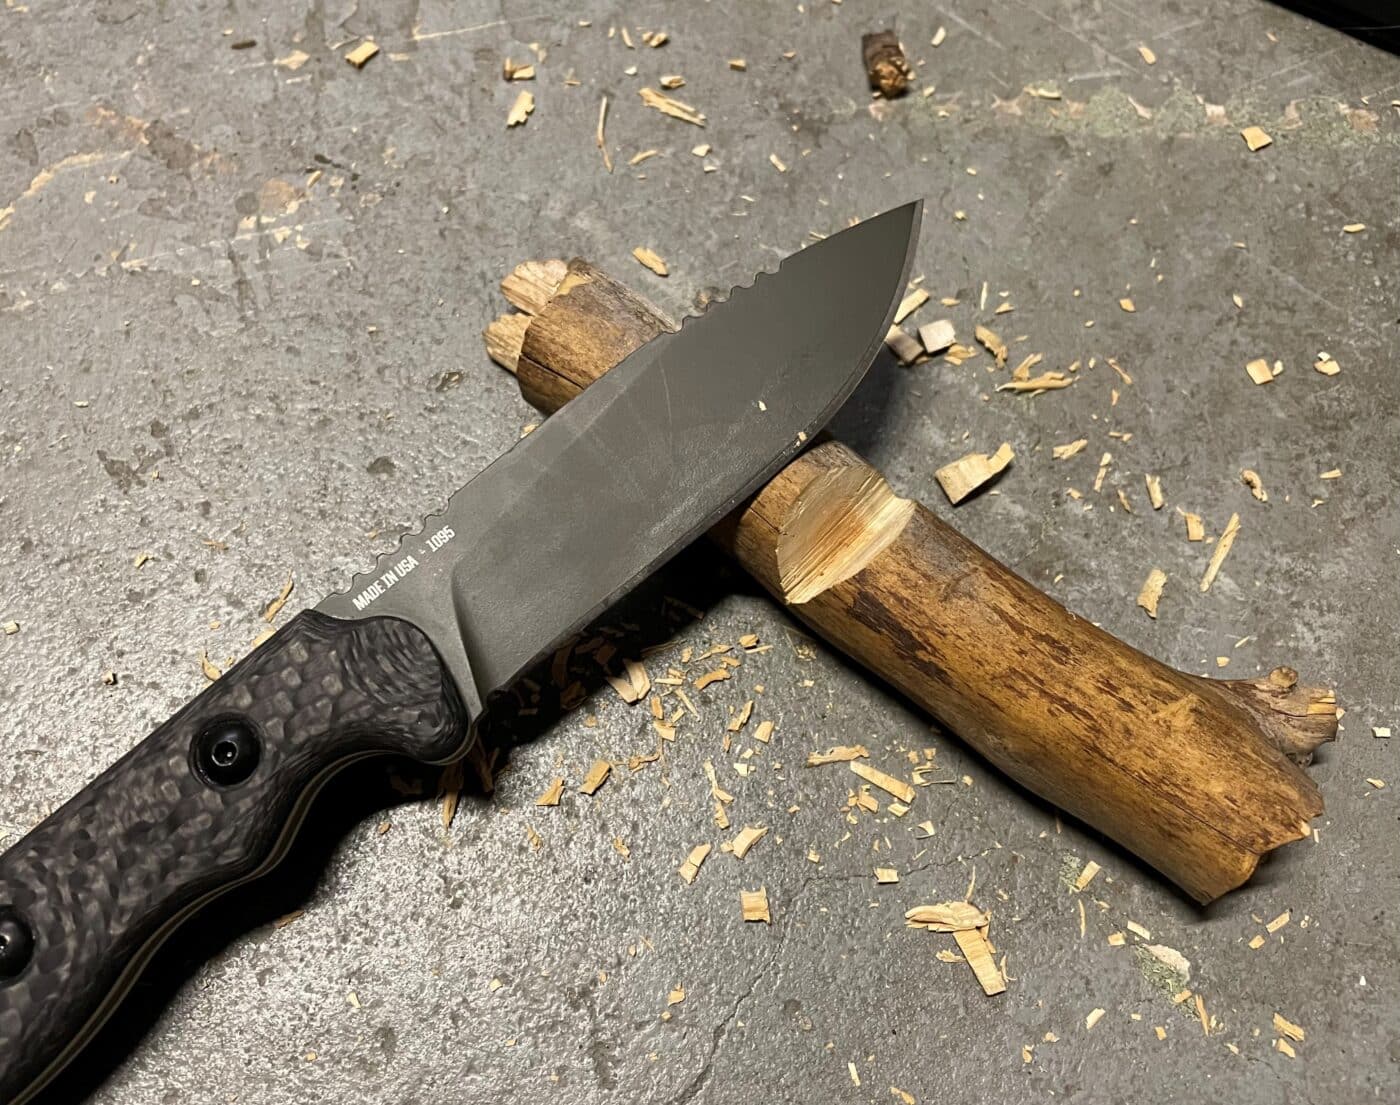 testing the Model 2020 knife on wood